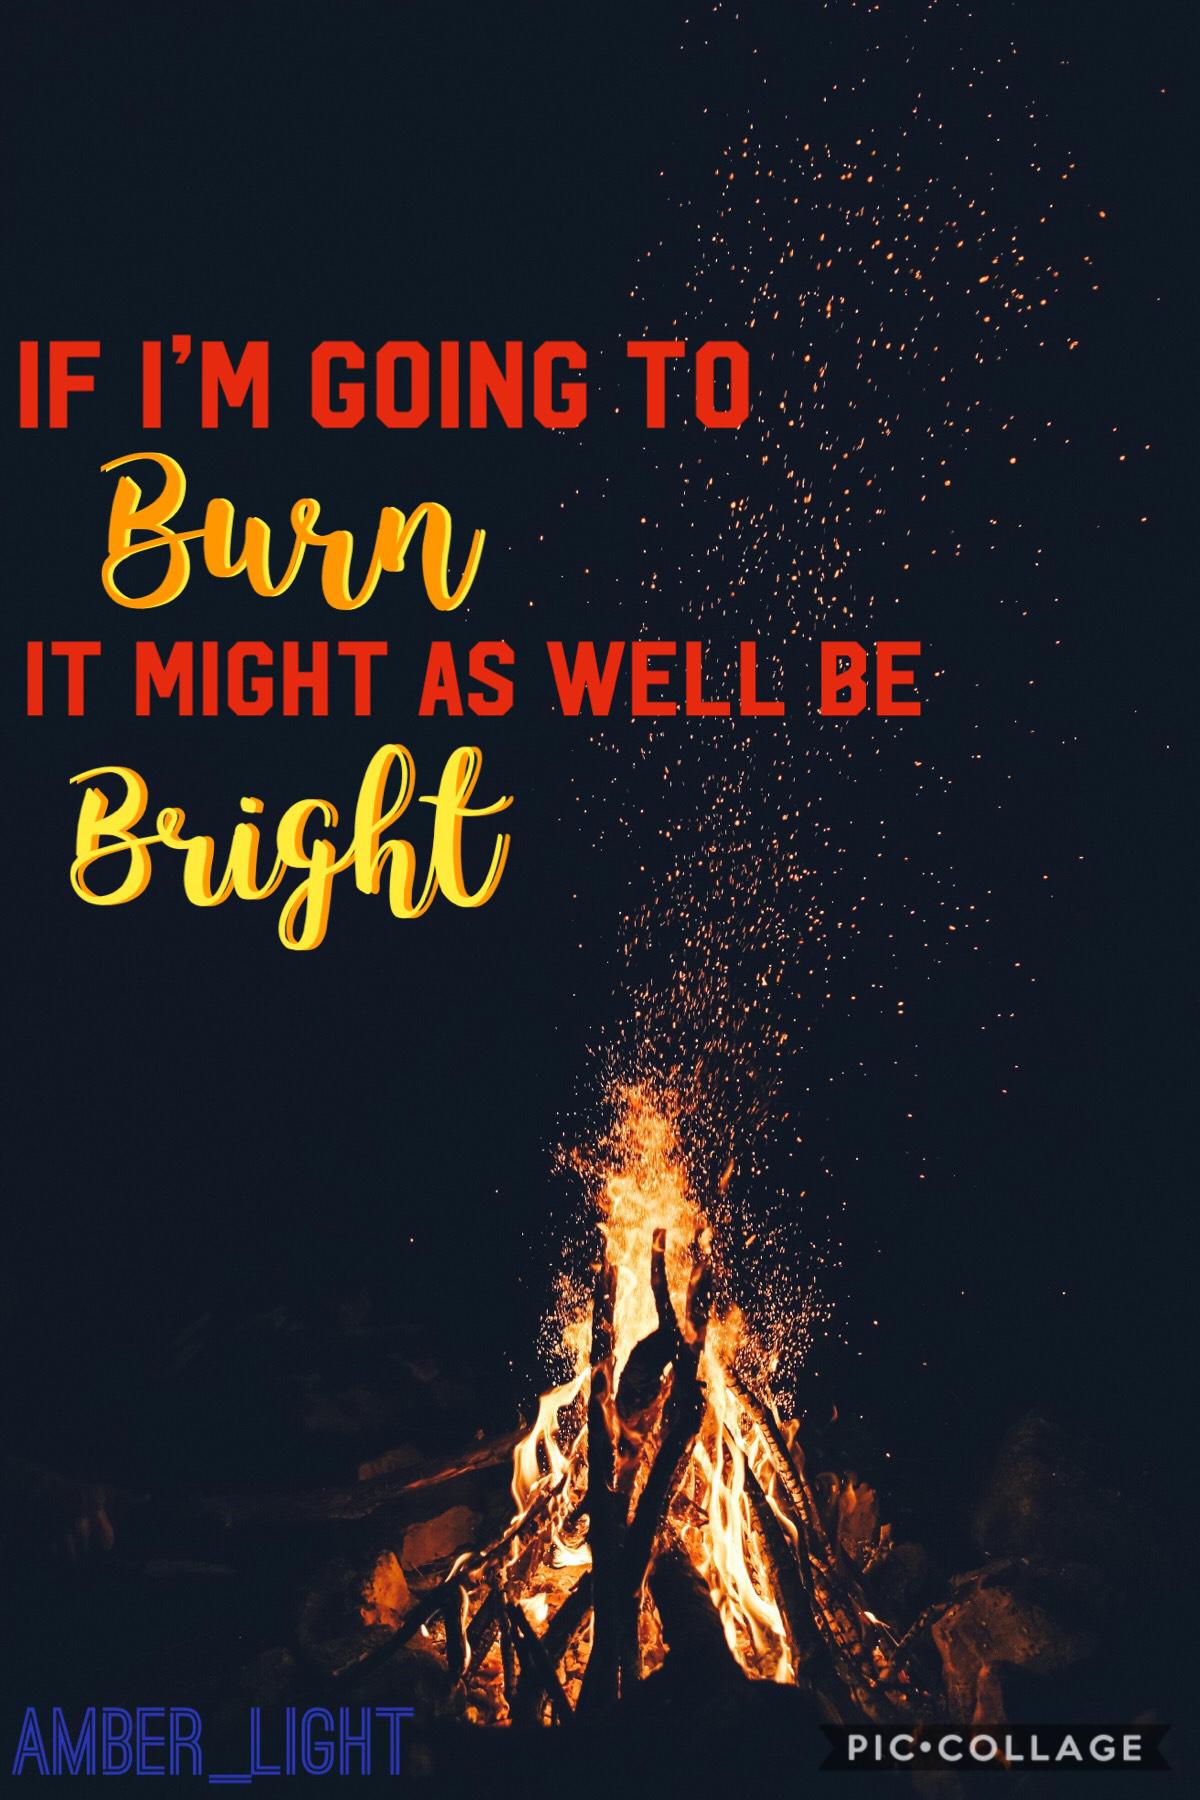 🤫Tap here!😁
Burn bright! 